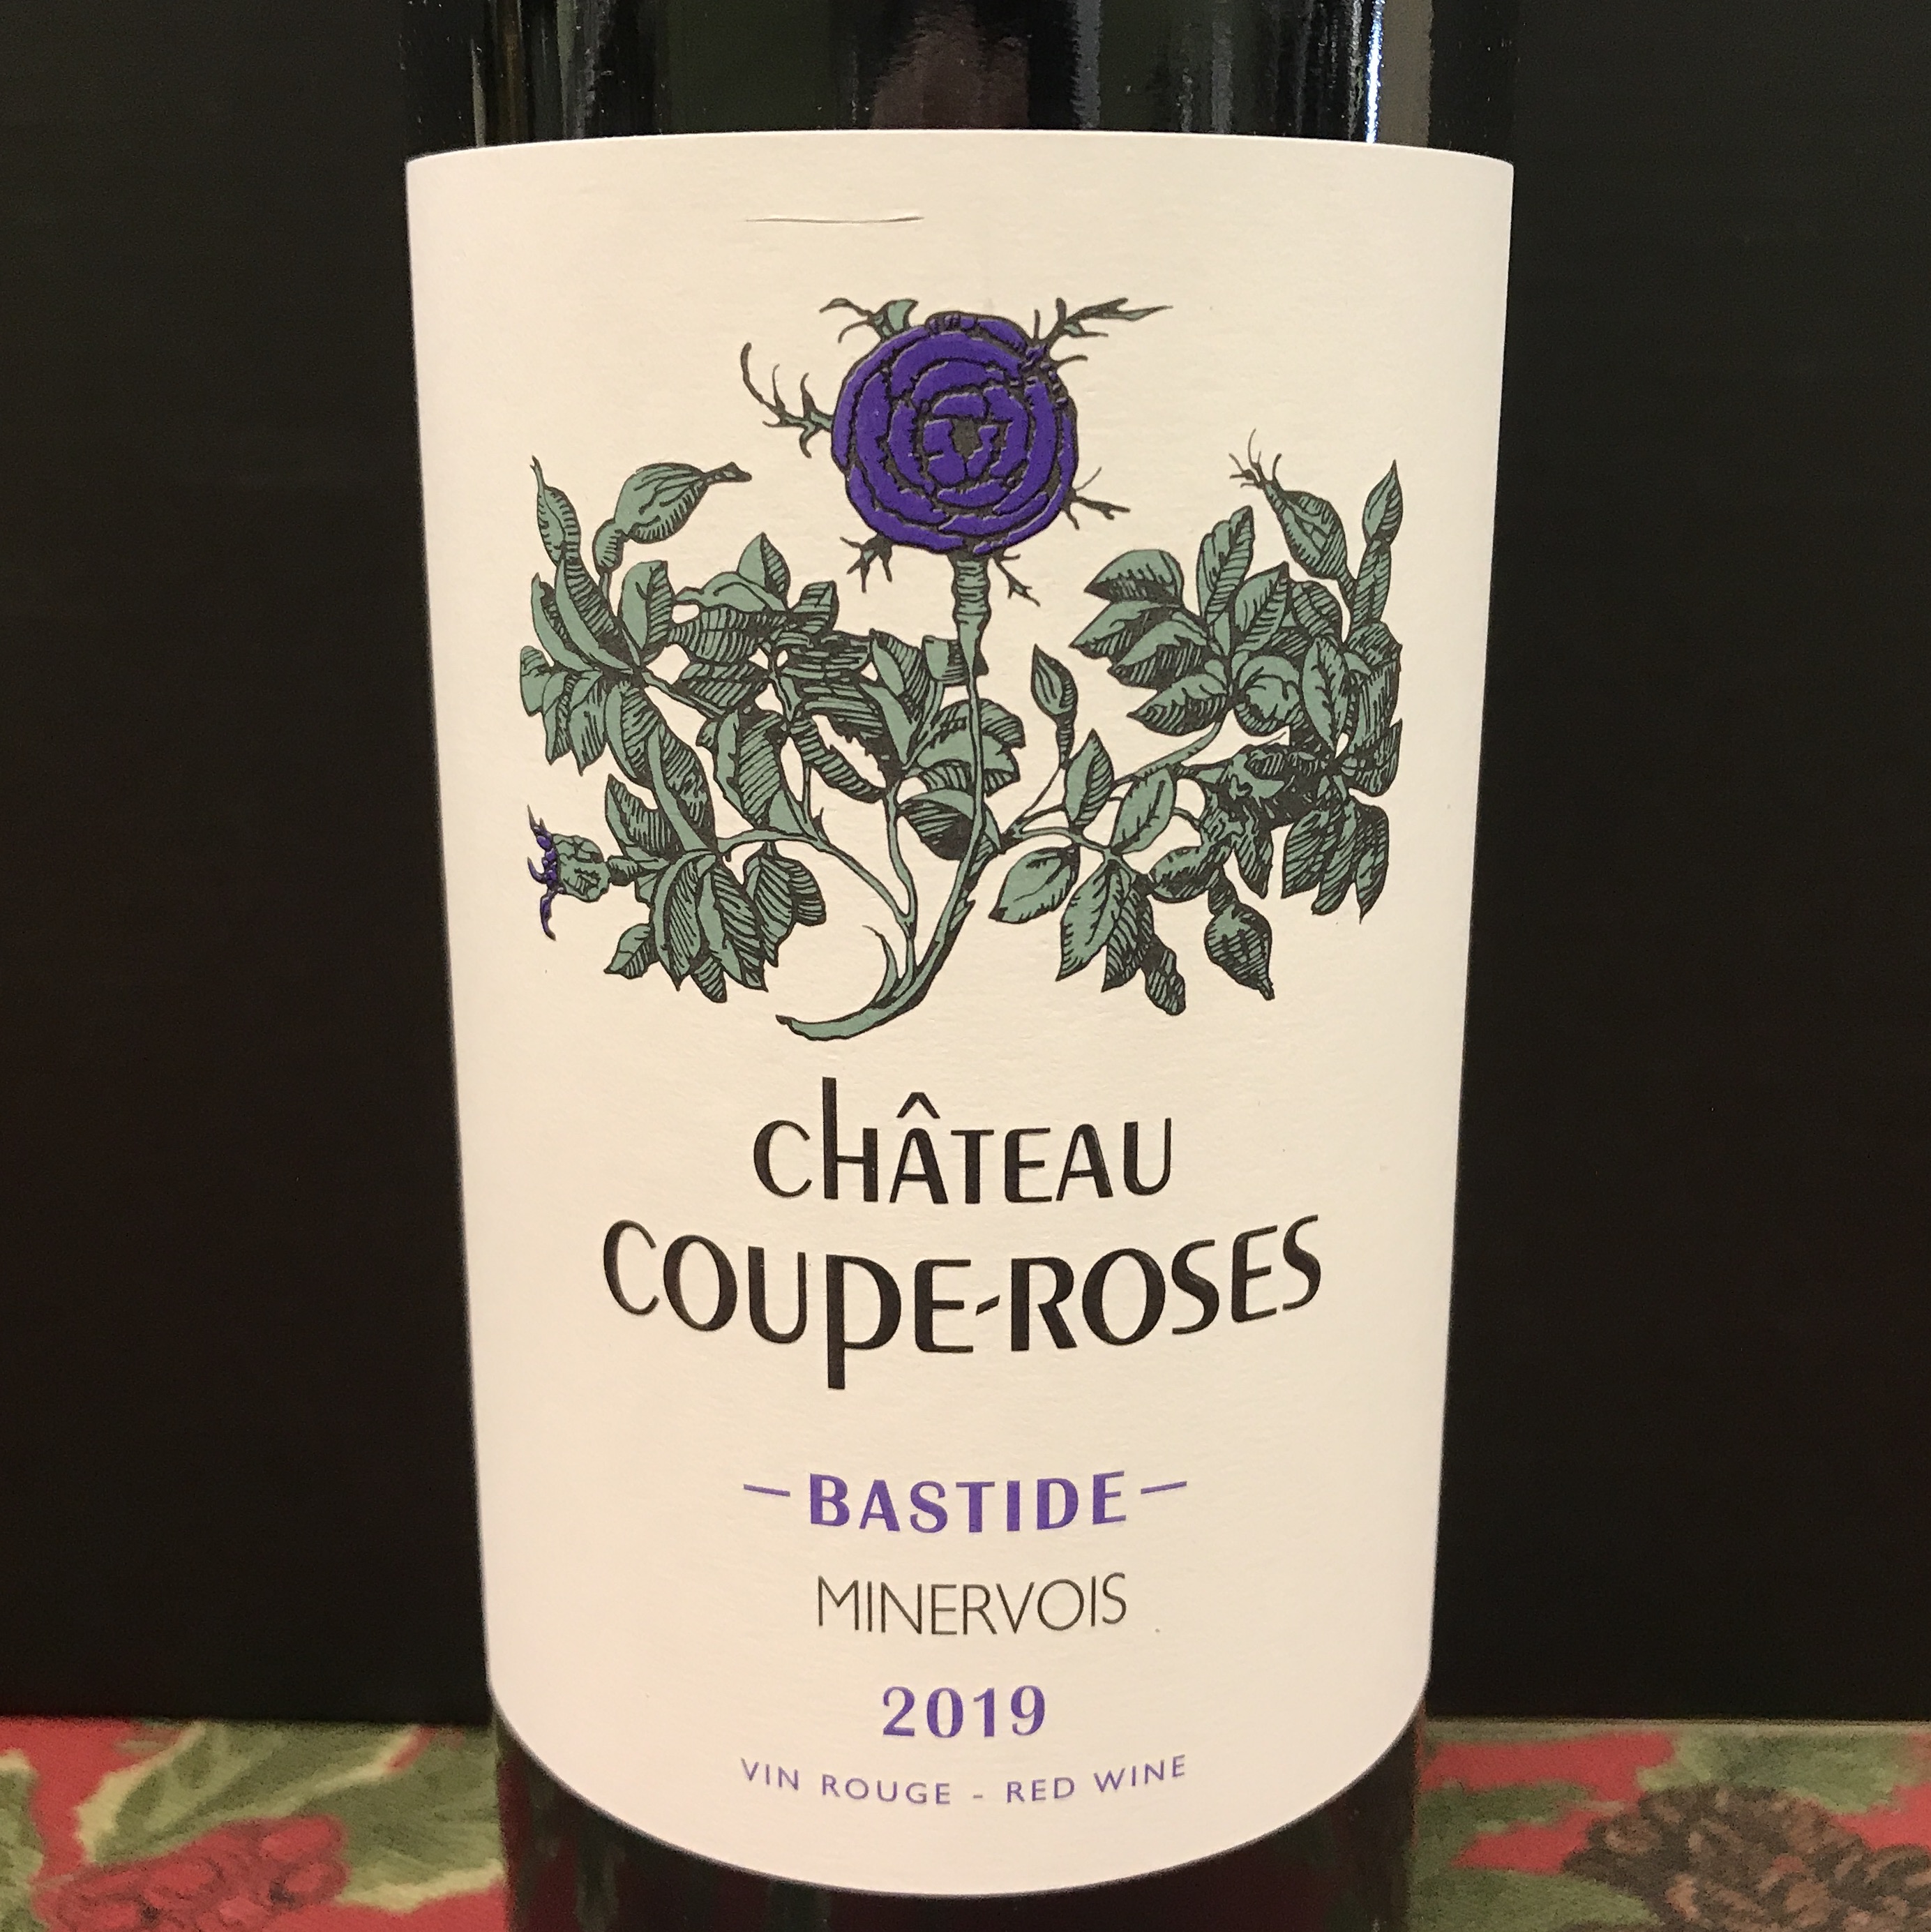 Chateau Coupe-Roses 'Bastide' Minervois 2019